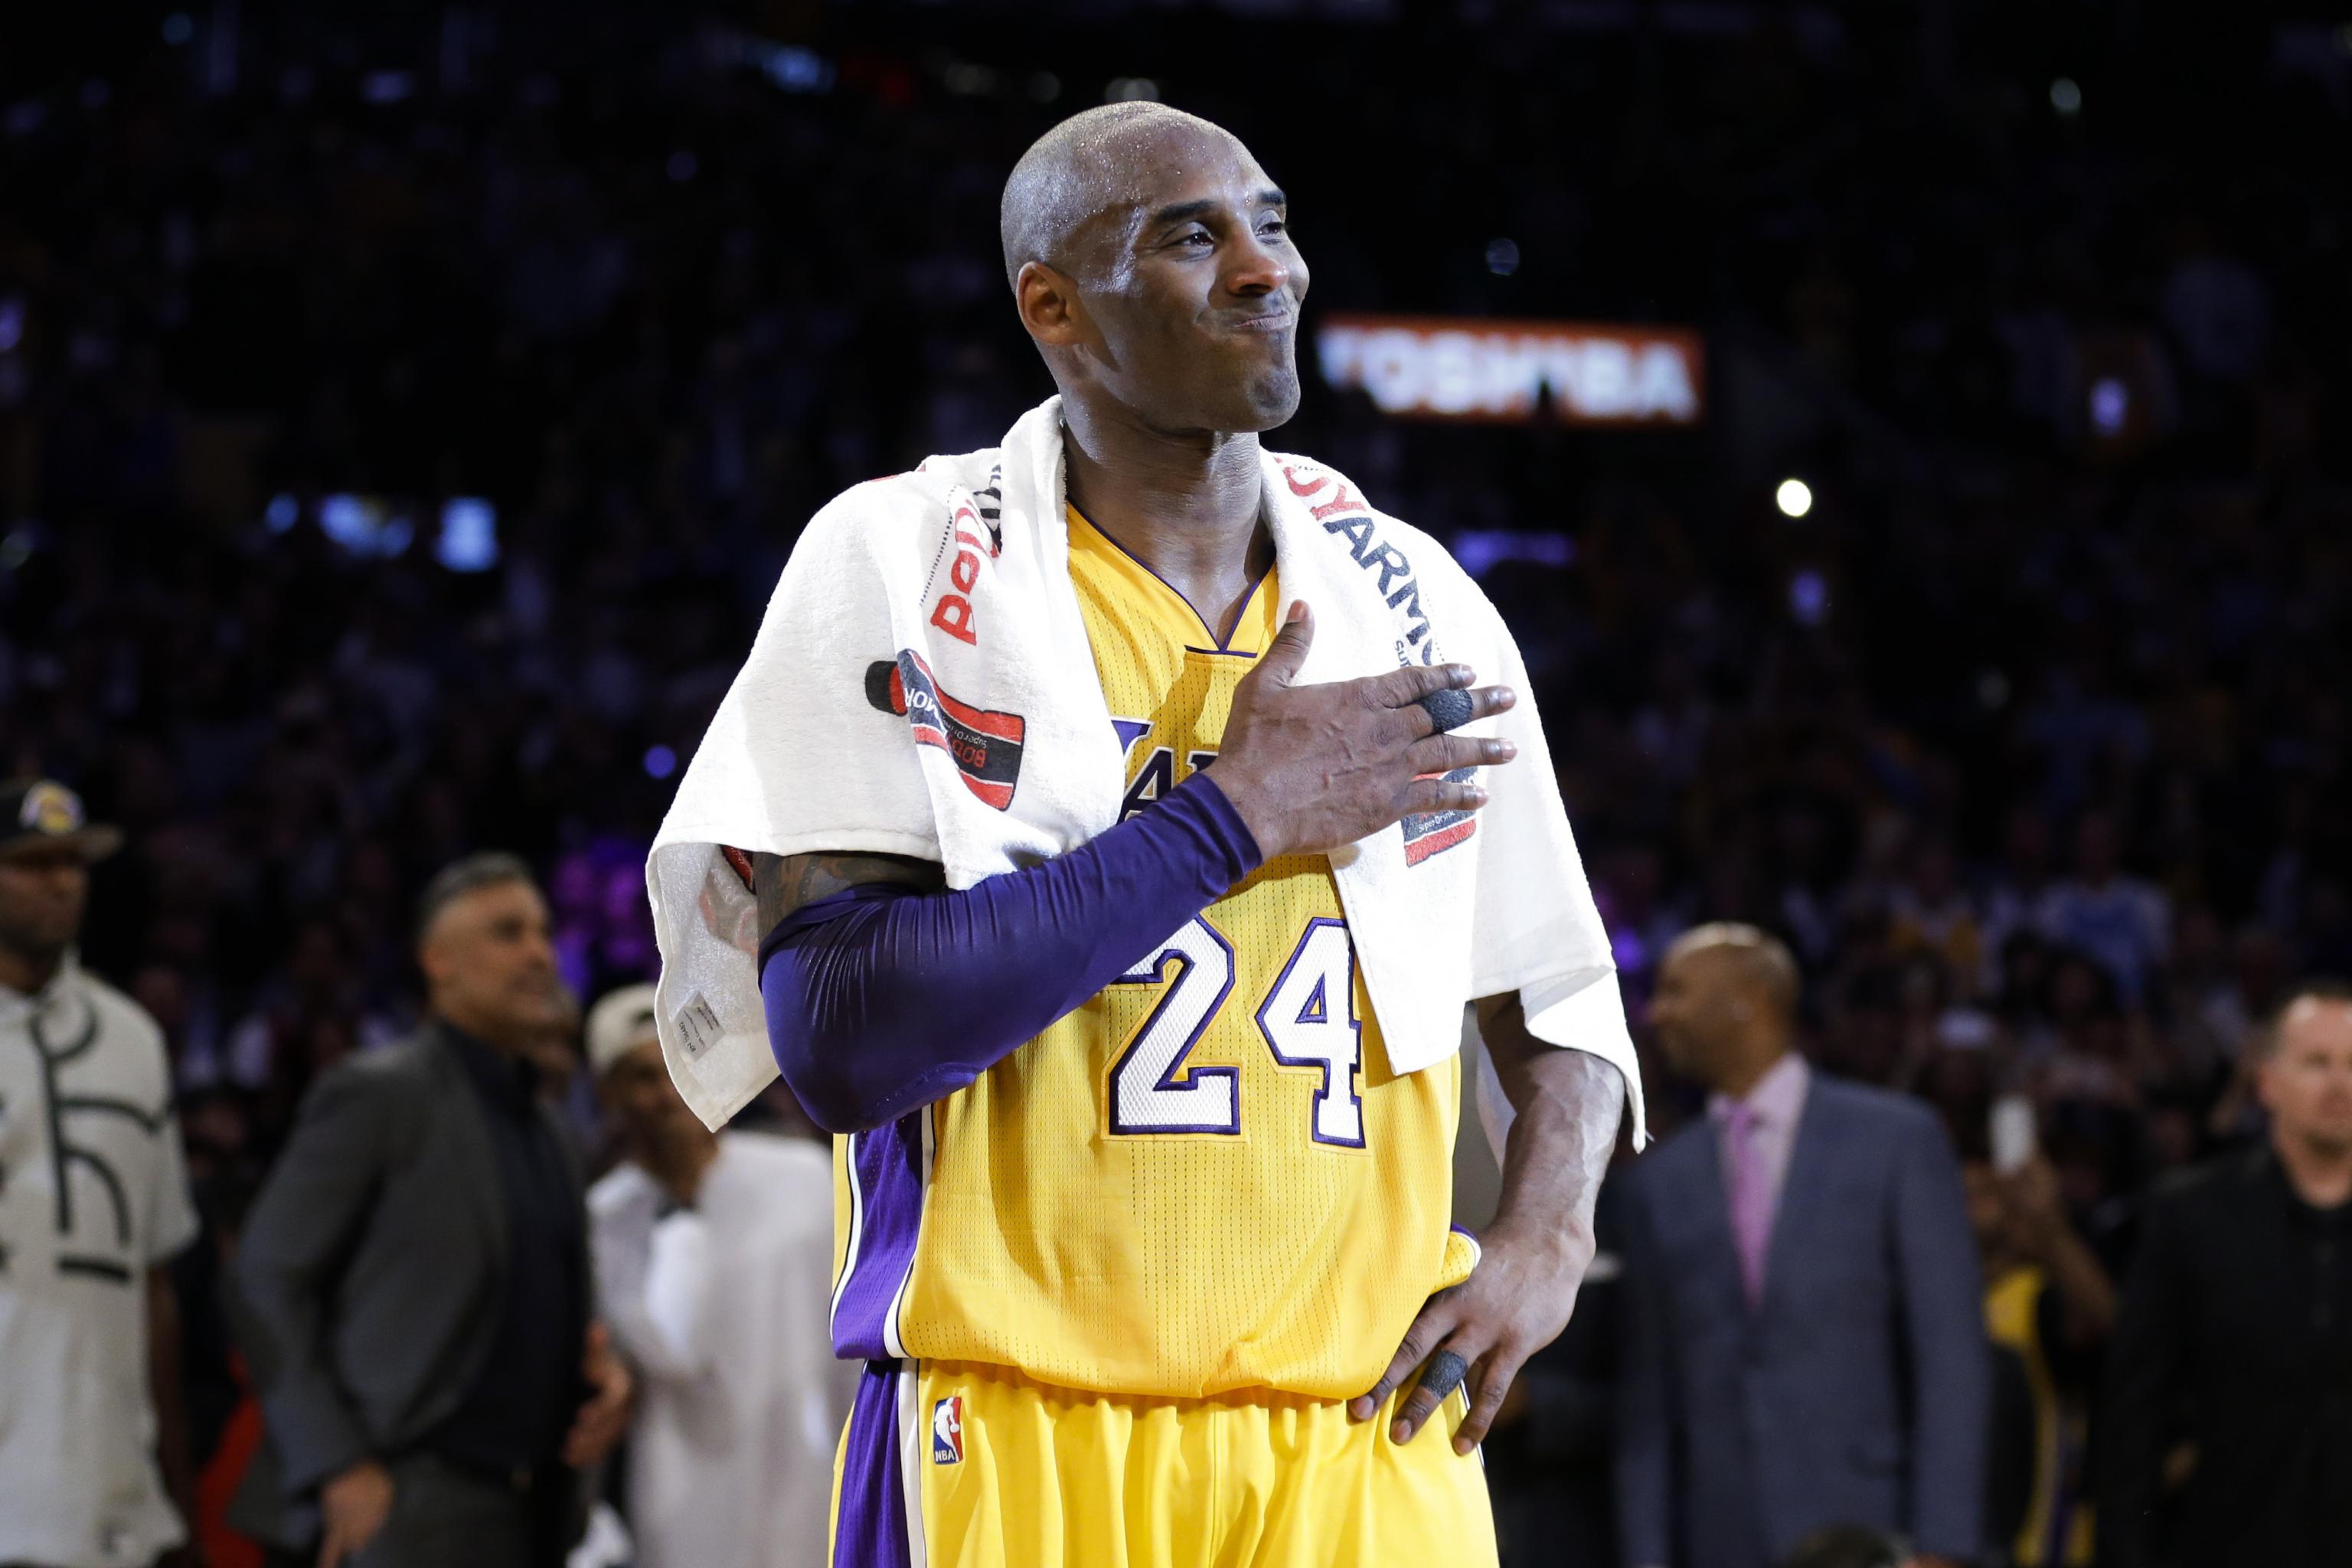 Los Angeles Lakers Kobe Bryant Black Mamba City Jersey